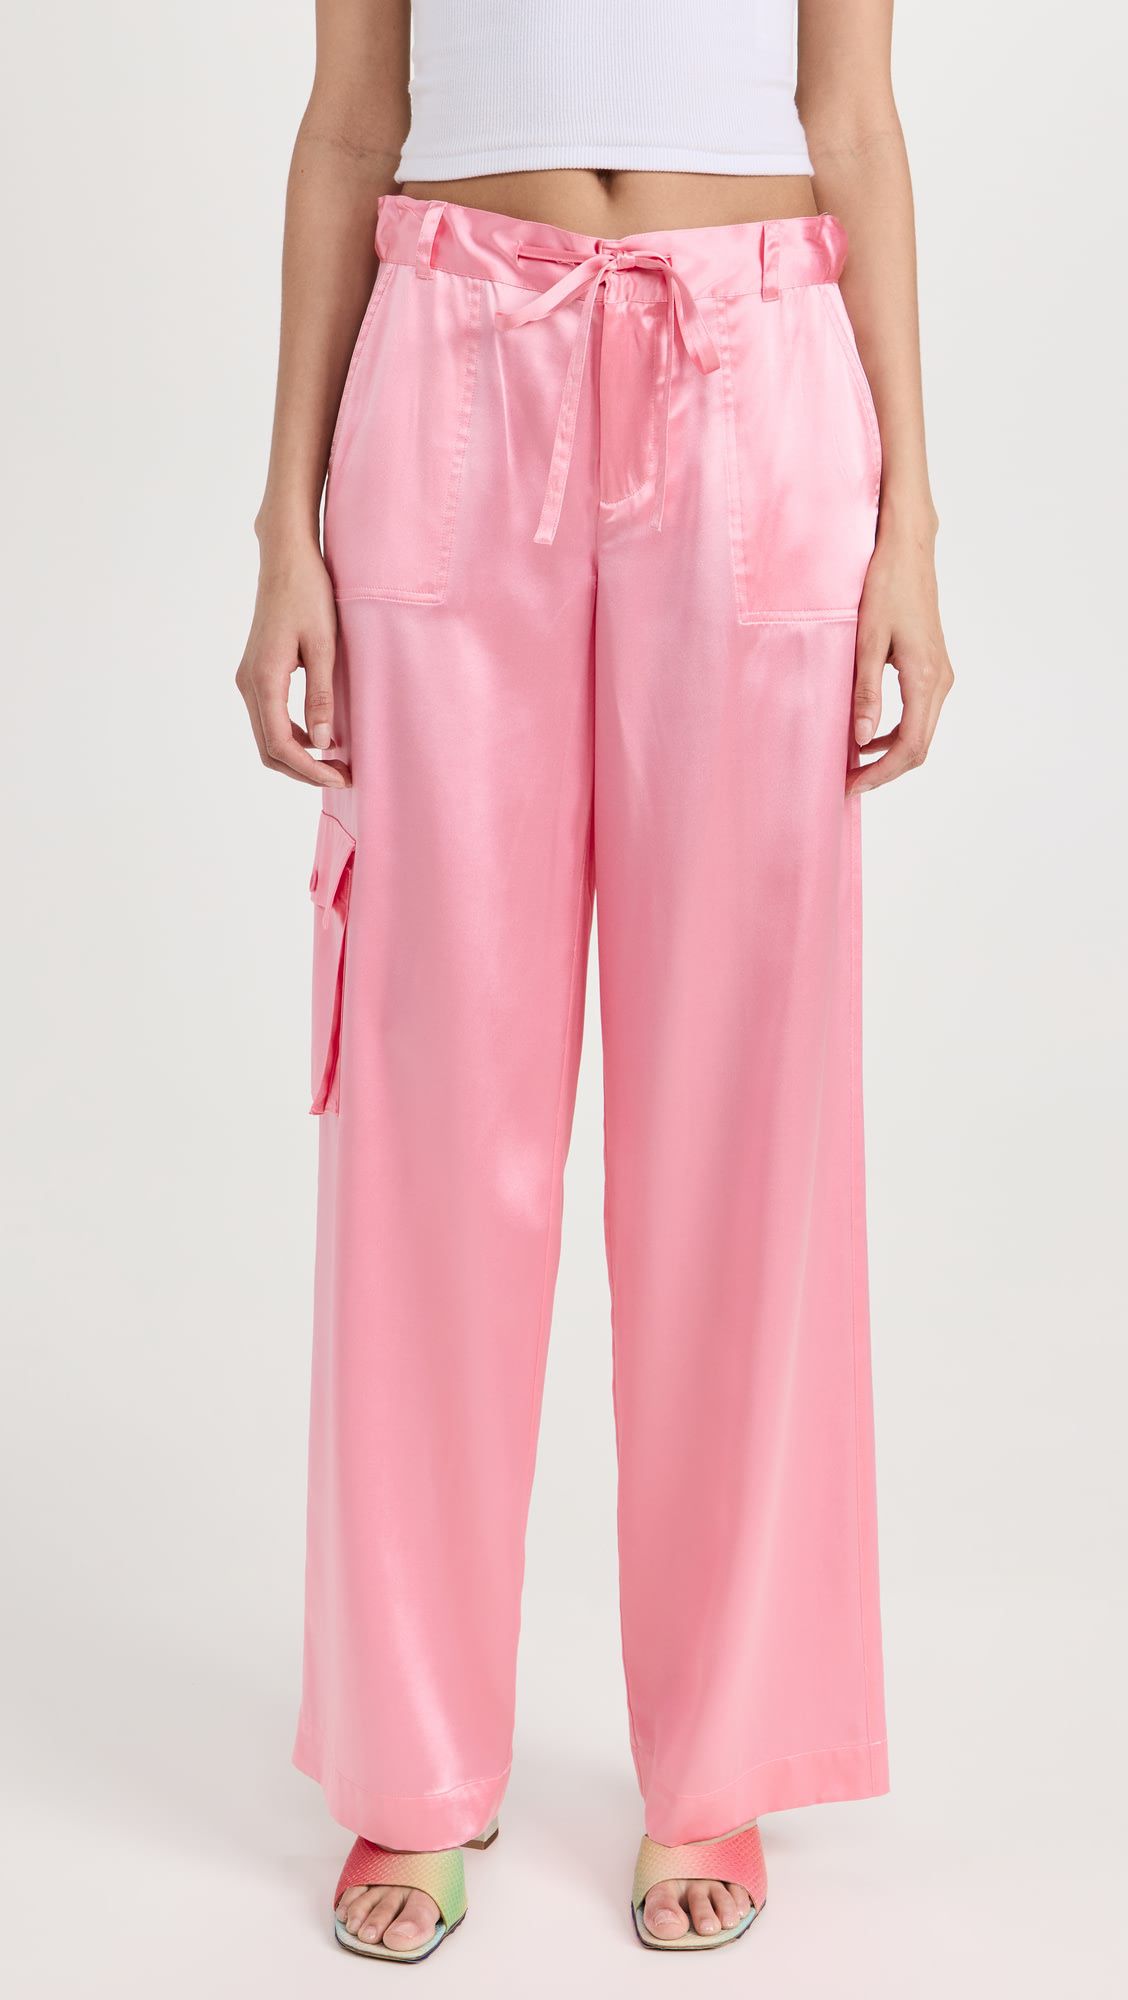 Made in China casual formal fashion pink satin loose pants